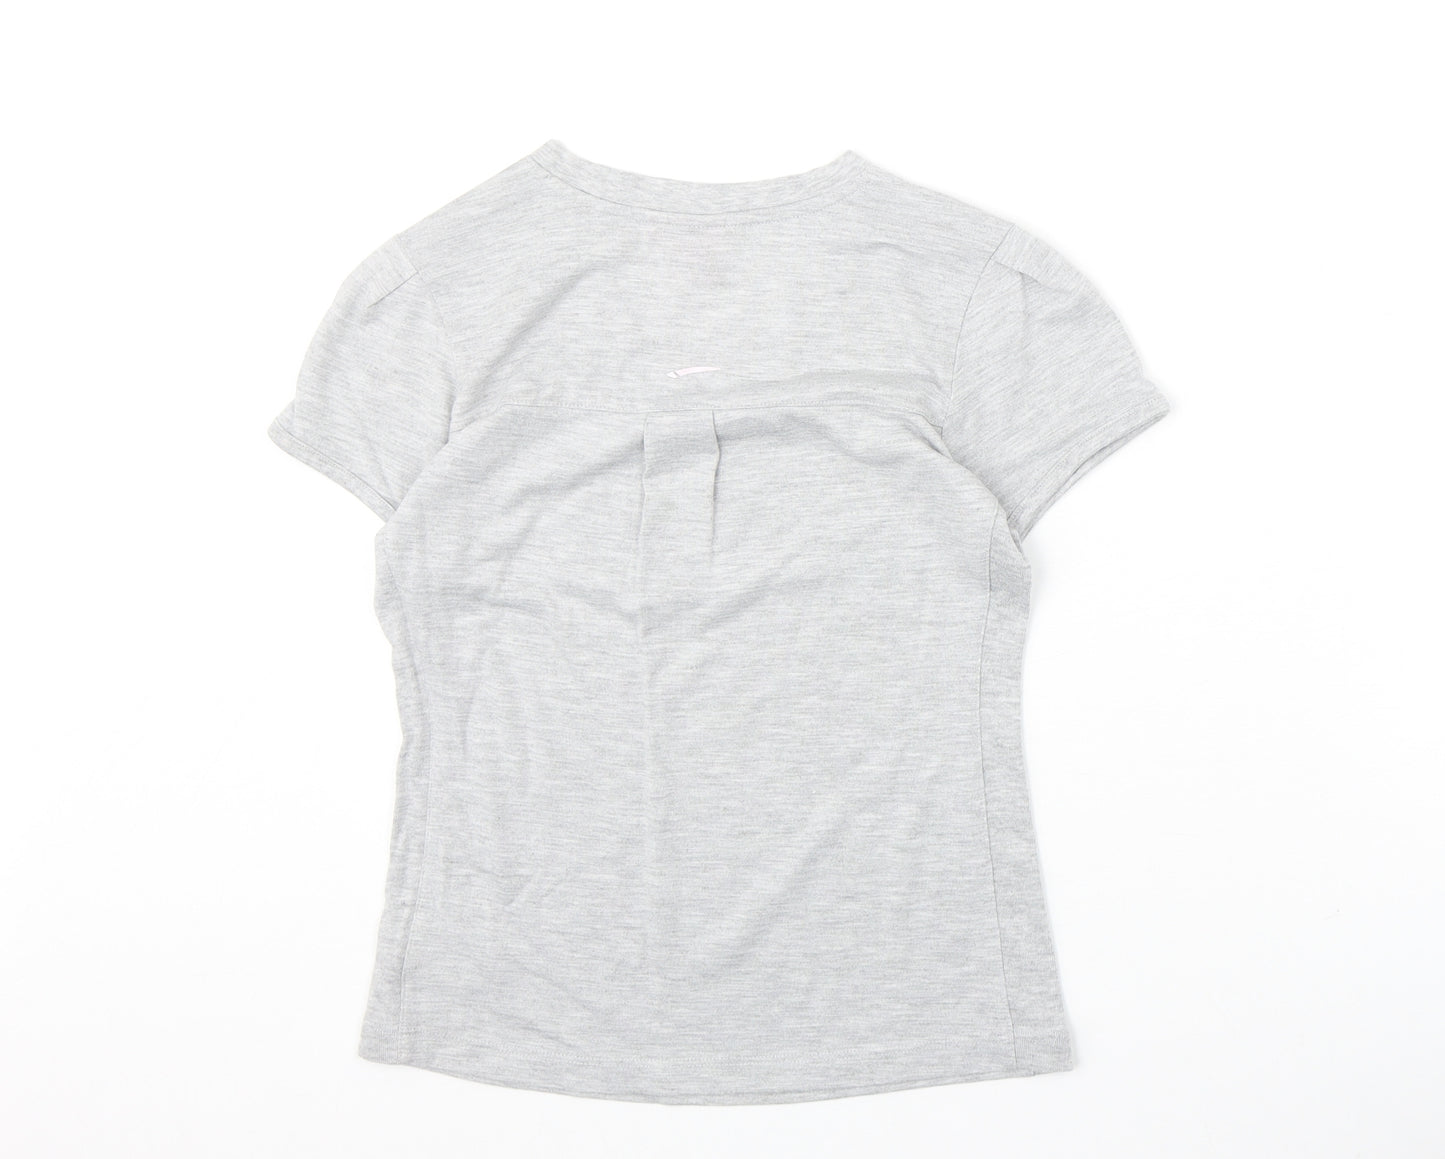 LA Gear Girls Grey Polyester Basic T-Shirt Size 13 Years V-Neck Pullover